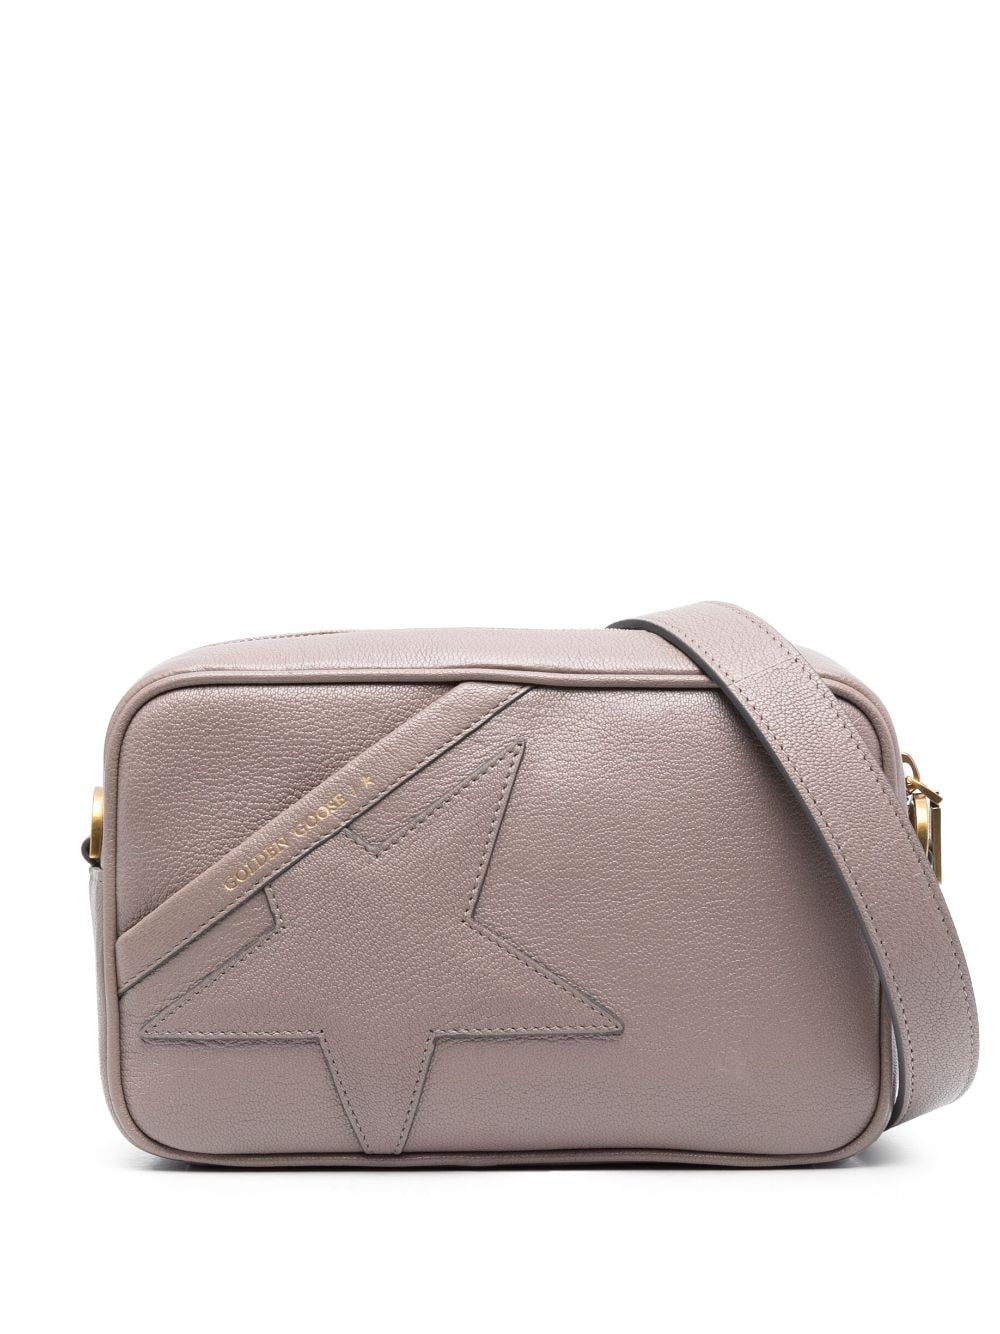 Star leather crossbody bag - 1